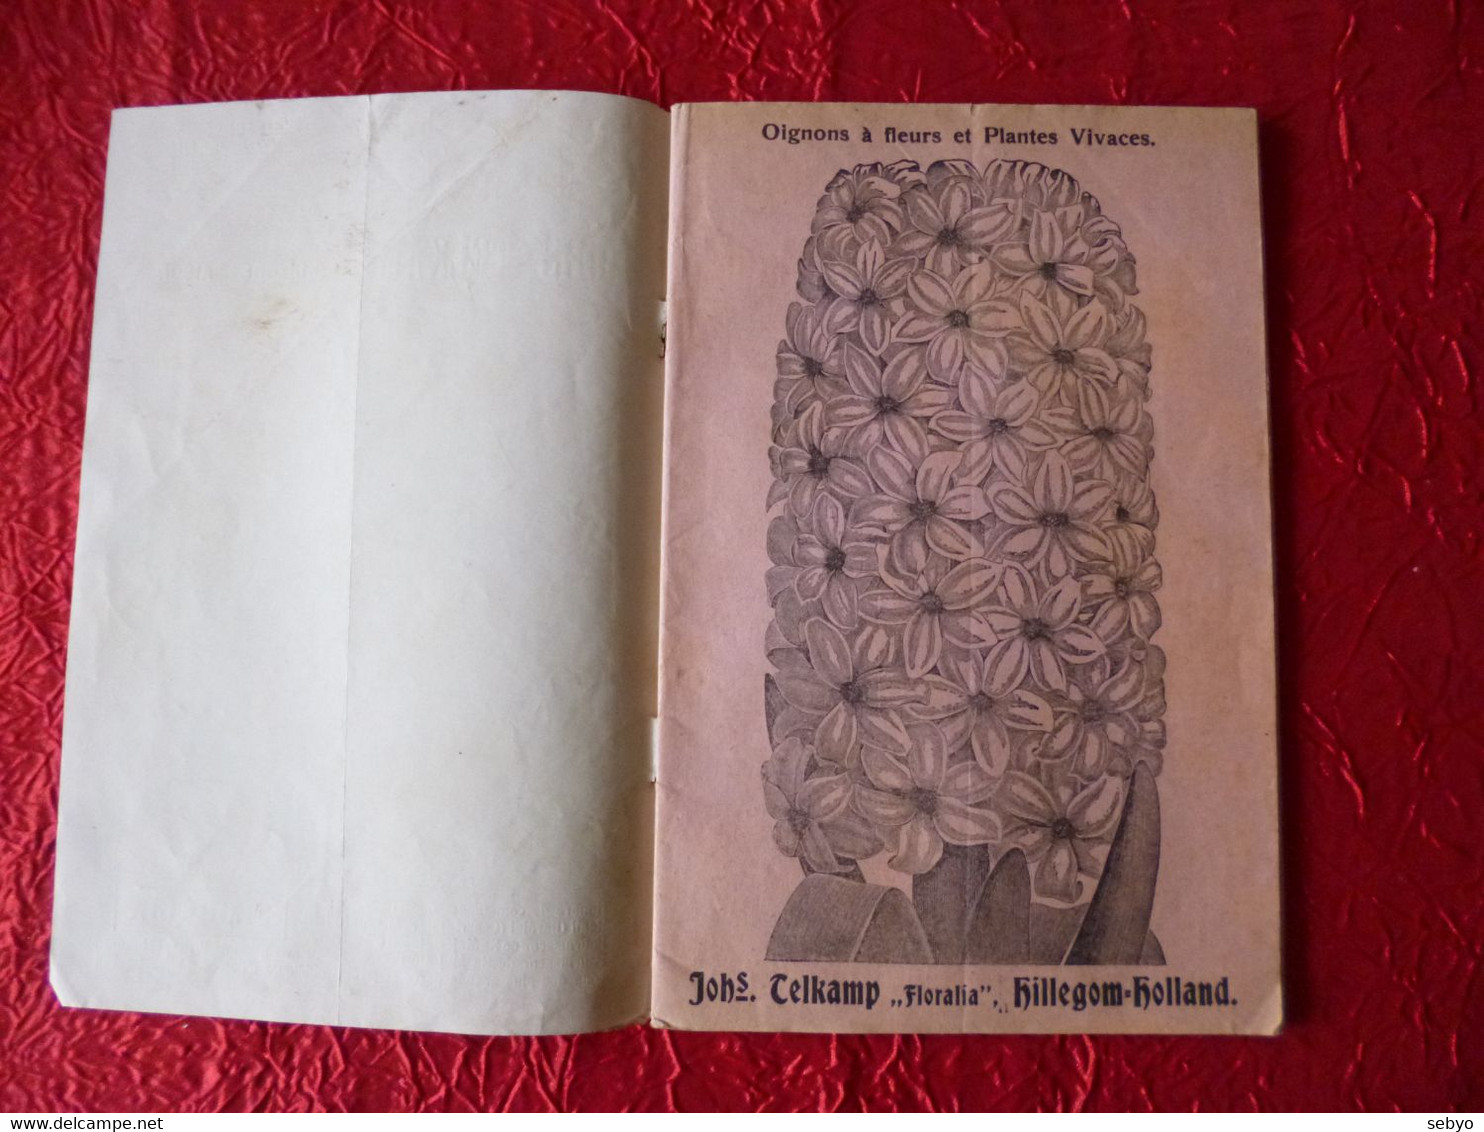 Catalogue De Vente De Fleurs. Johs TELKAMP.  Hillegom. Etablissements Horticoles FLORALIA.  1913-1914 - Nederland